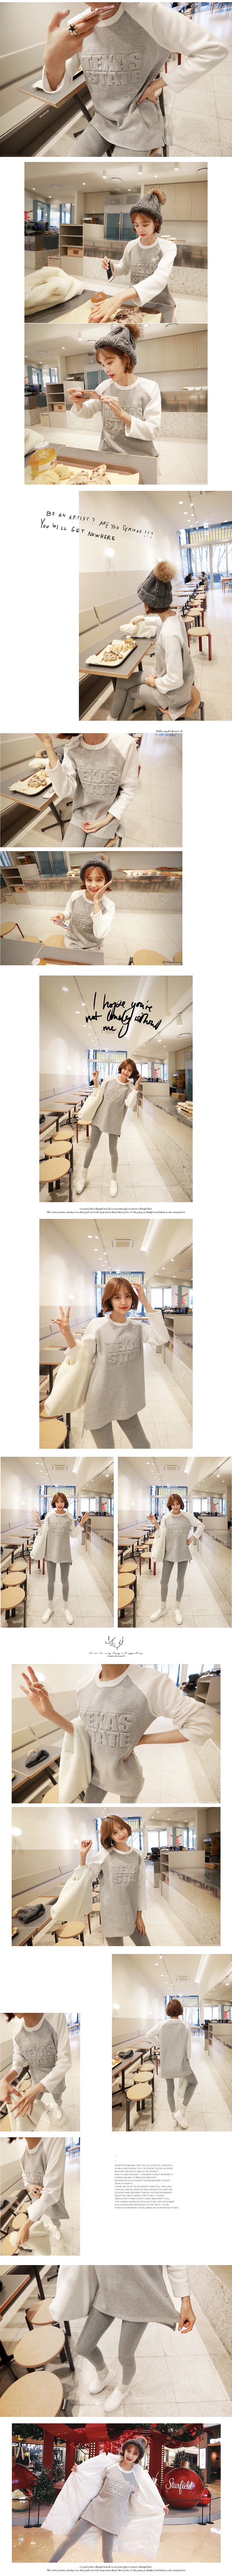 KOREA Embossed letters Fleece Raglan T-shirt Grey One Size(Free) [Free Shipping]